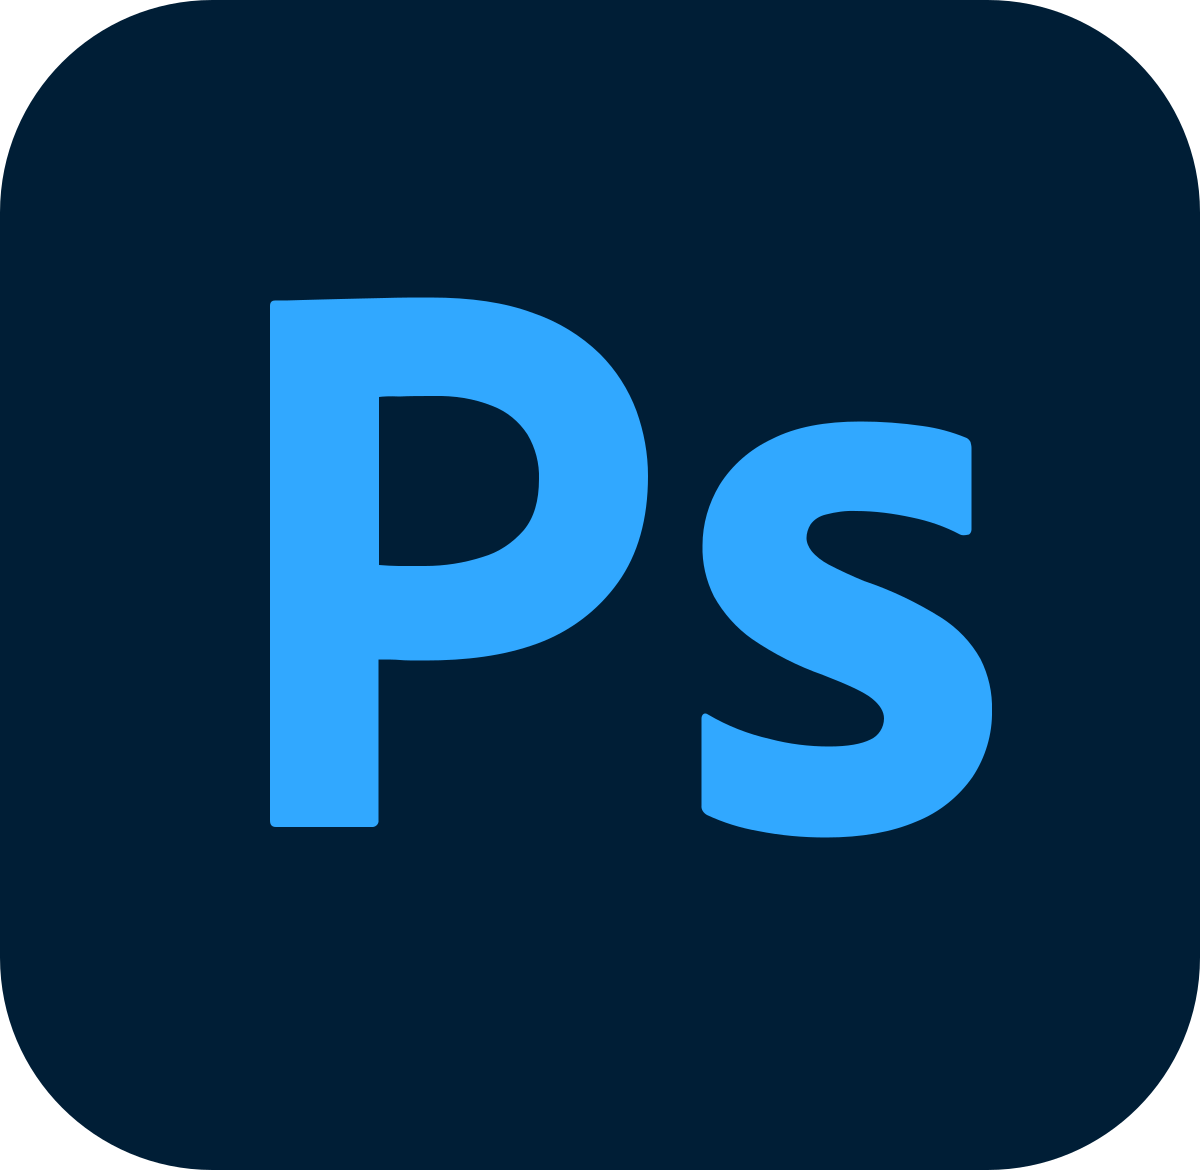 Adobe photoshop free download cs6 full